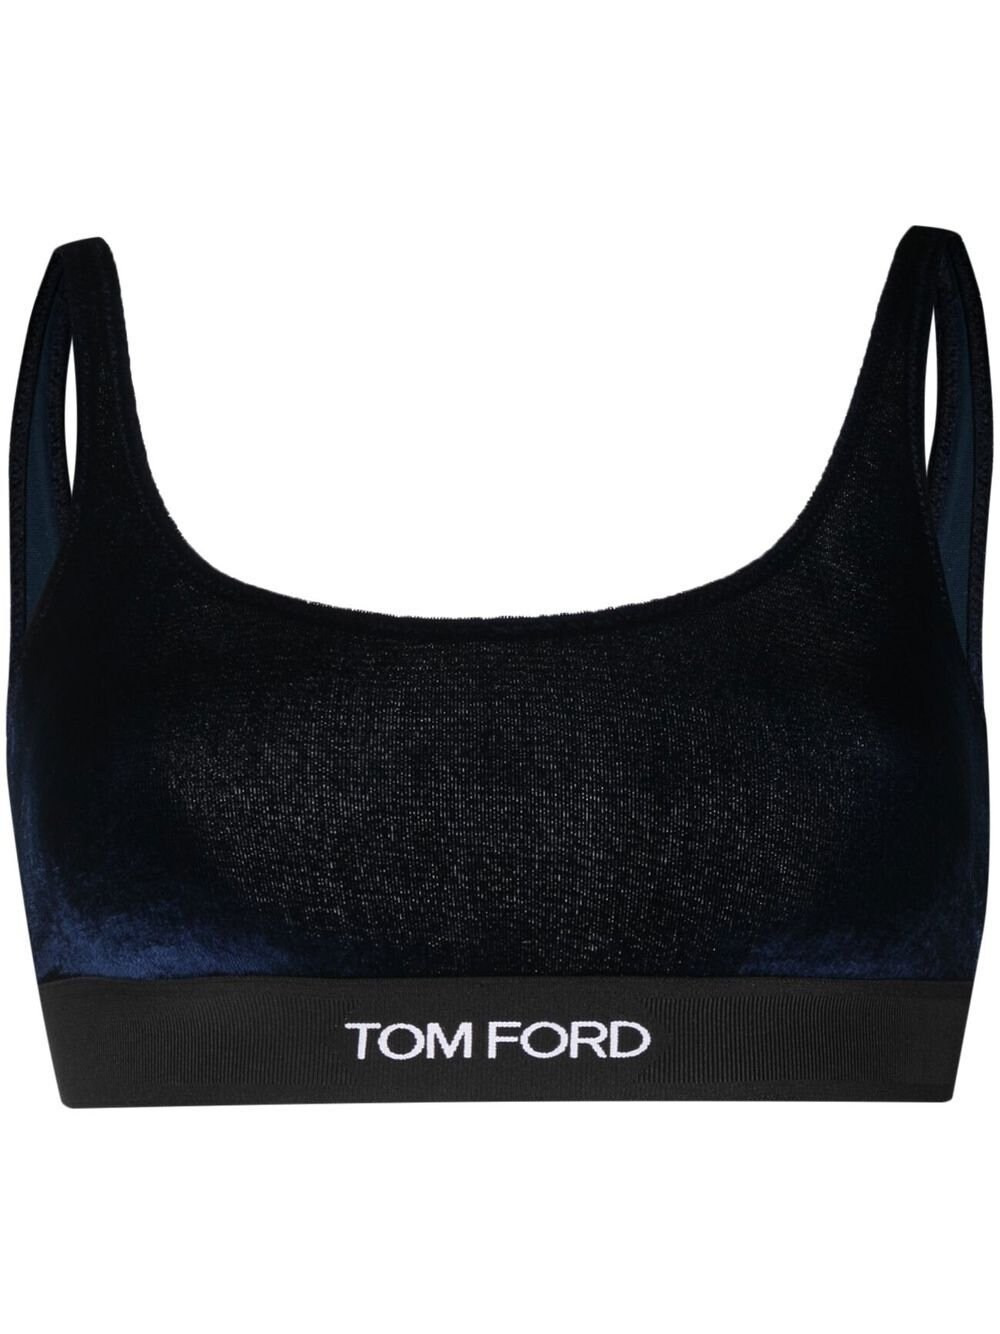 TOM FORD logo-band low-back bra blue | MODES